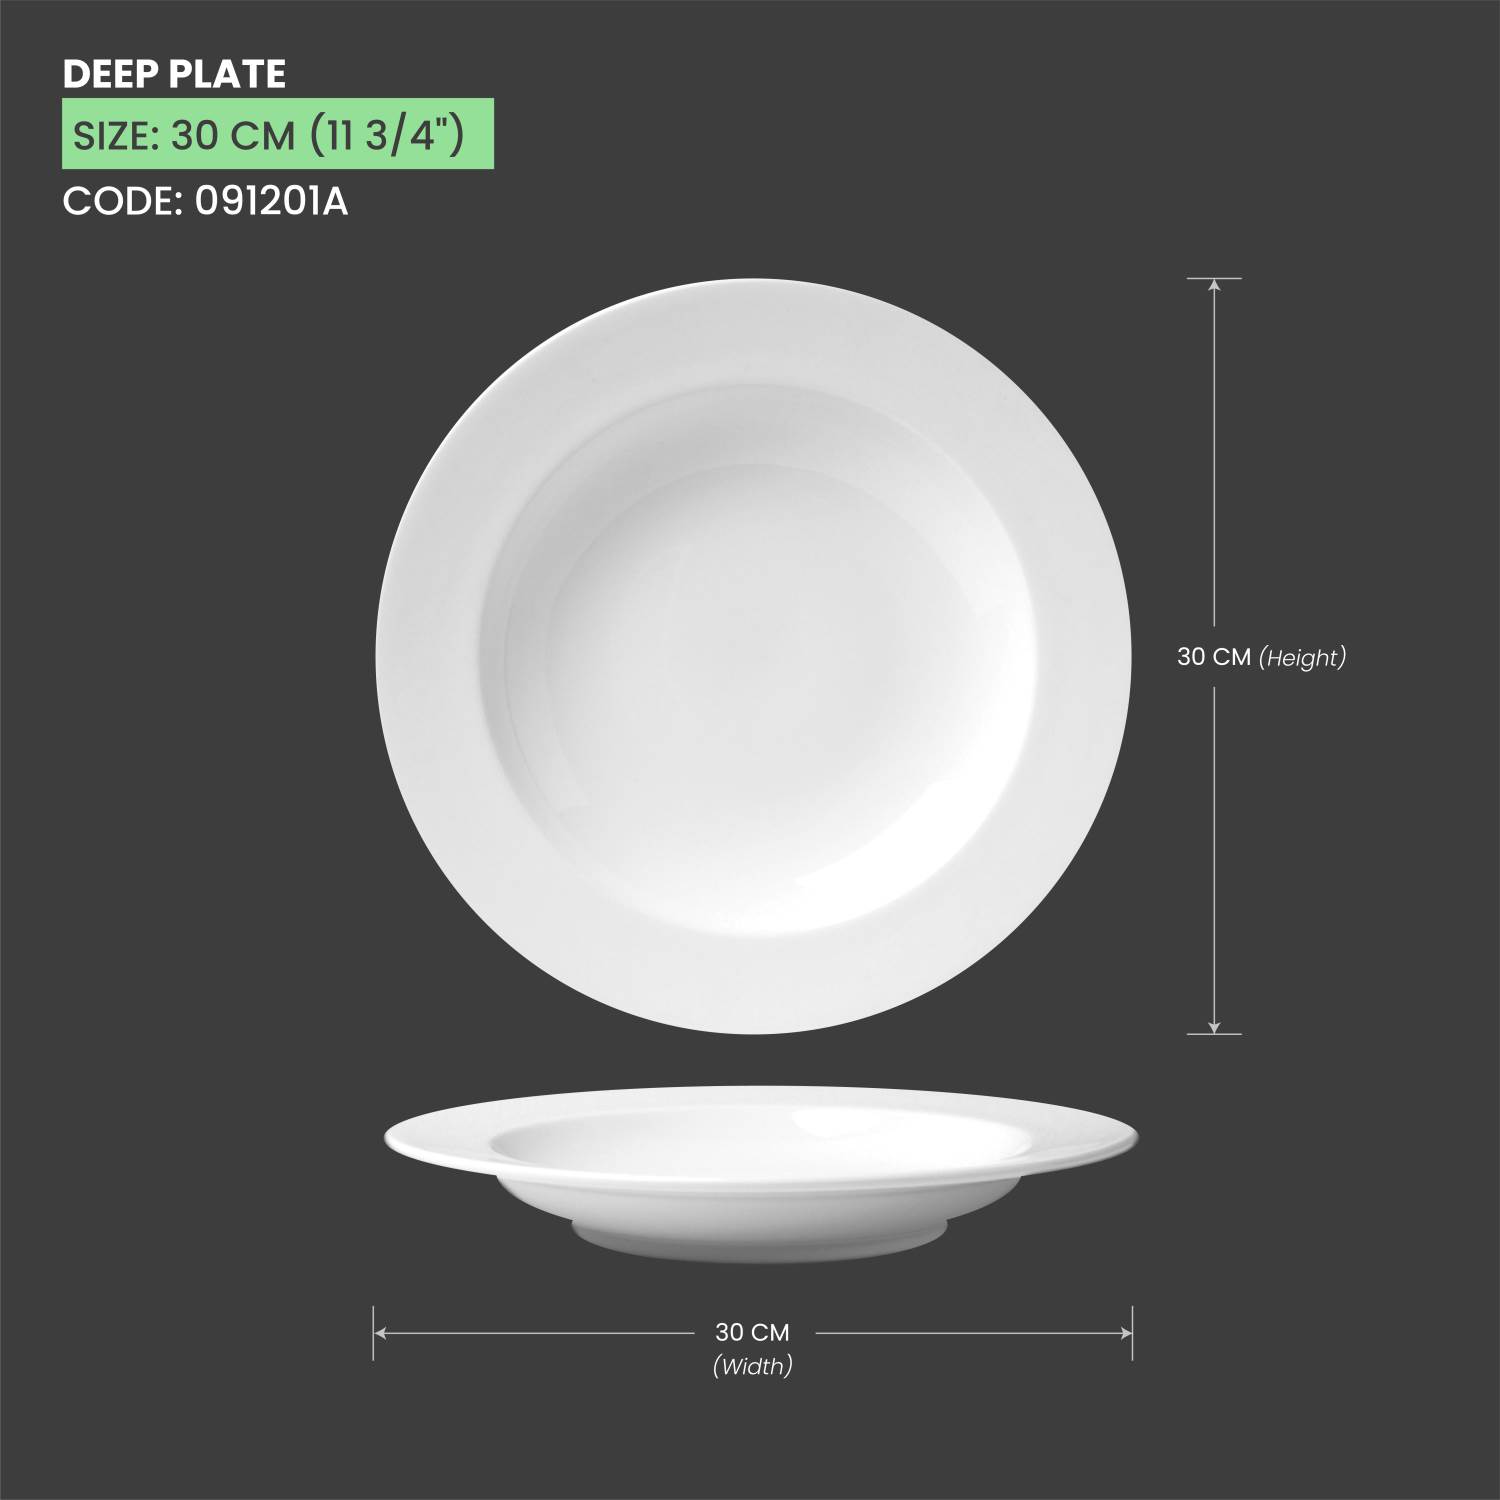 Baralee Simple Plus Deep Plate 30 Cm (11 3/4")